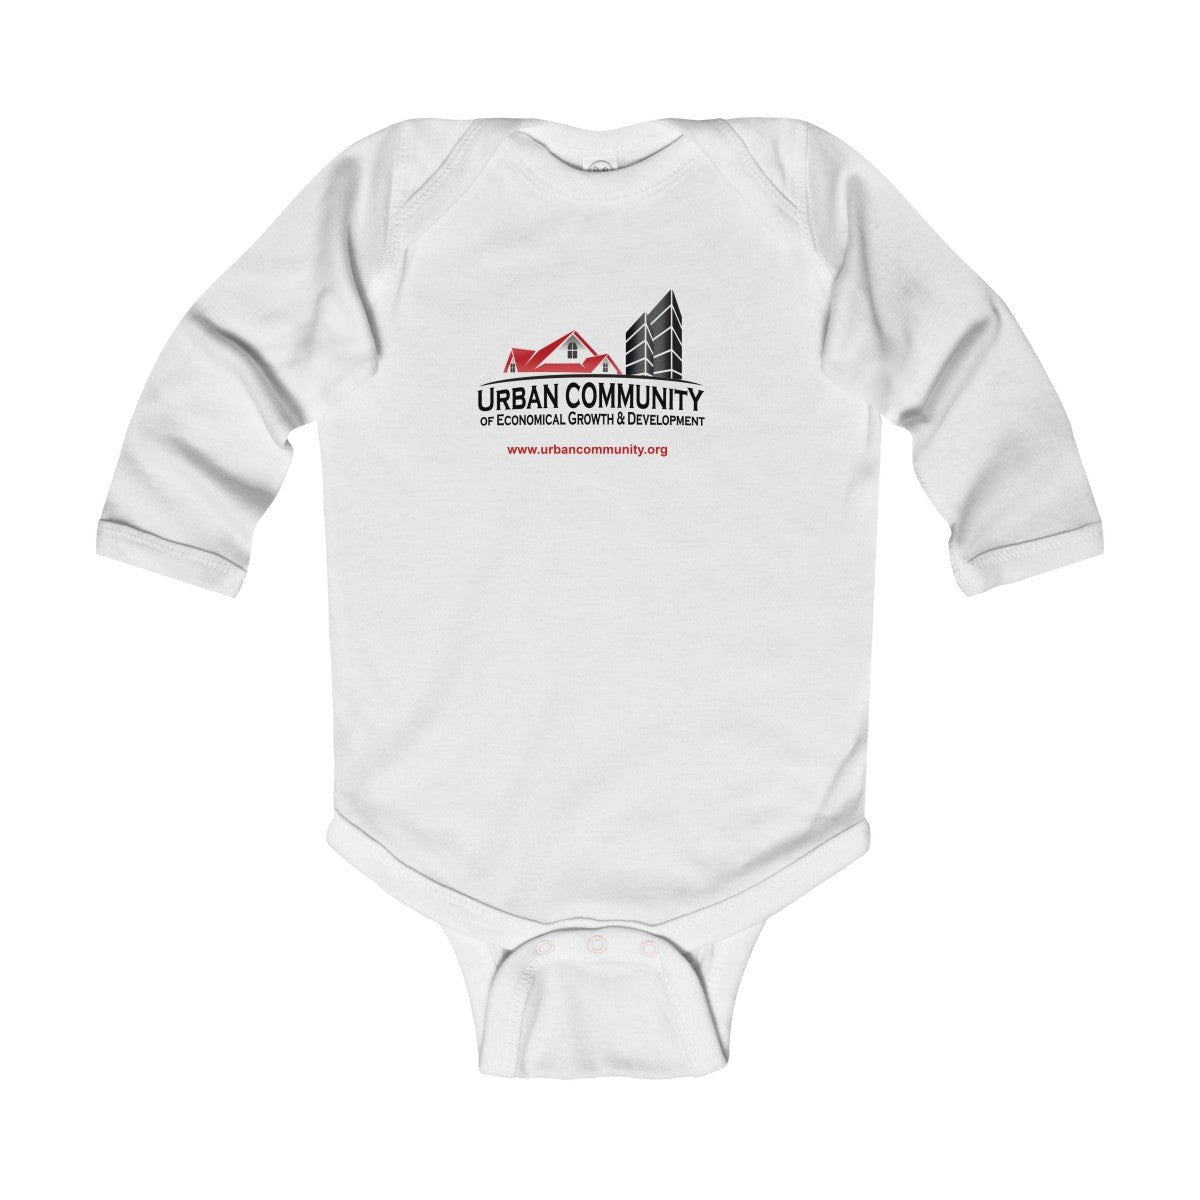 Our Signature Infant Long Sleeve Bodysuit